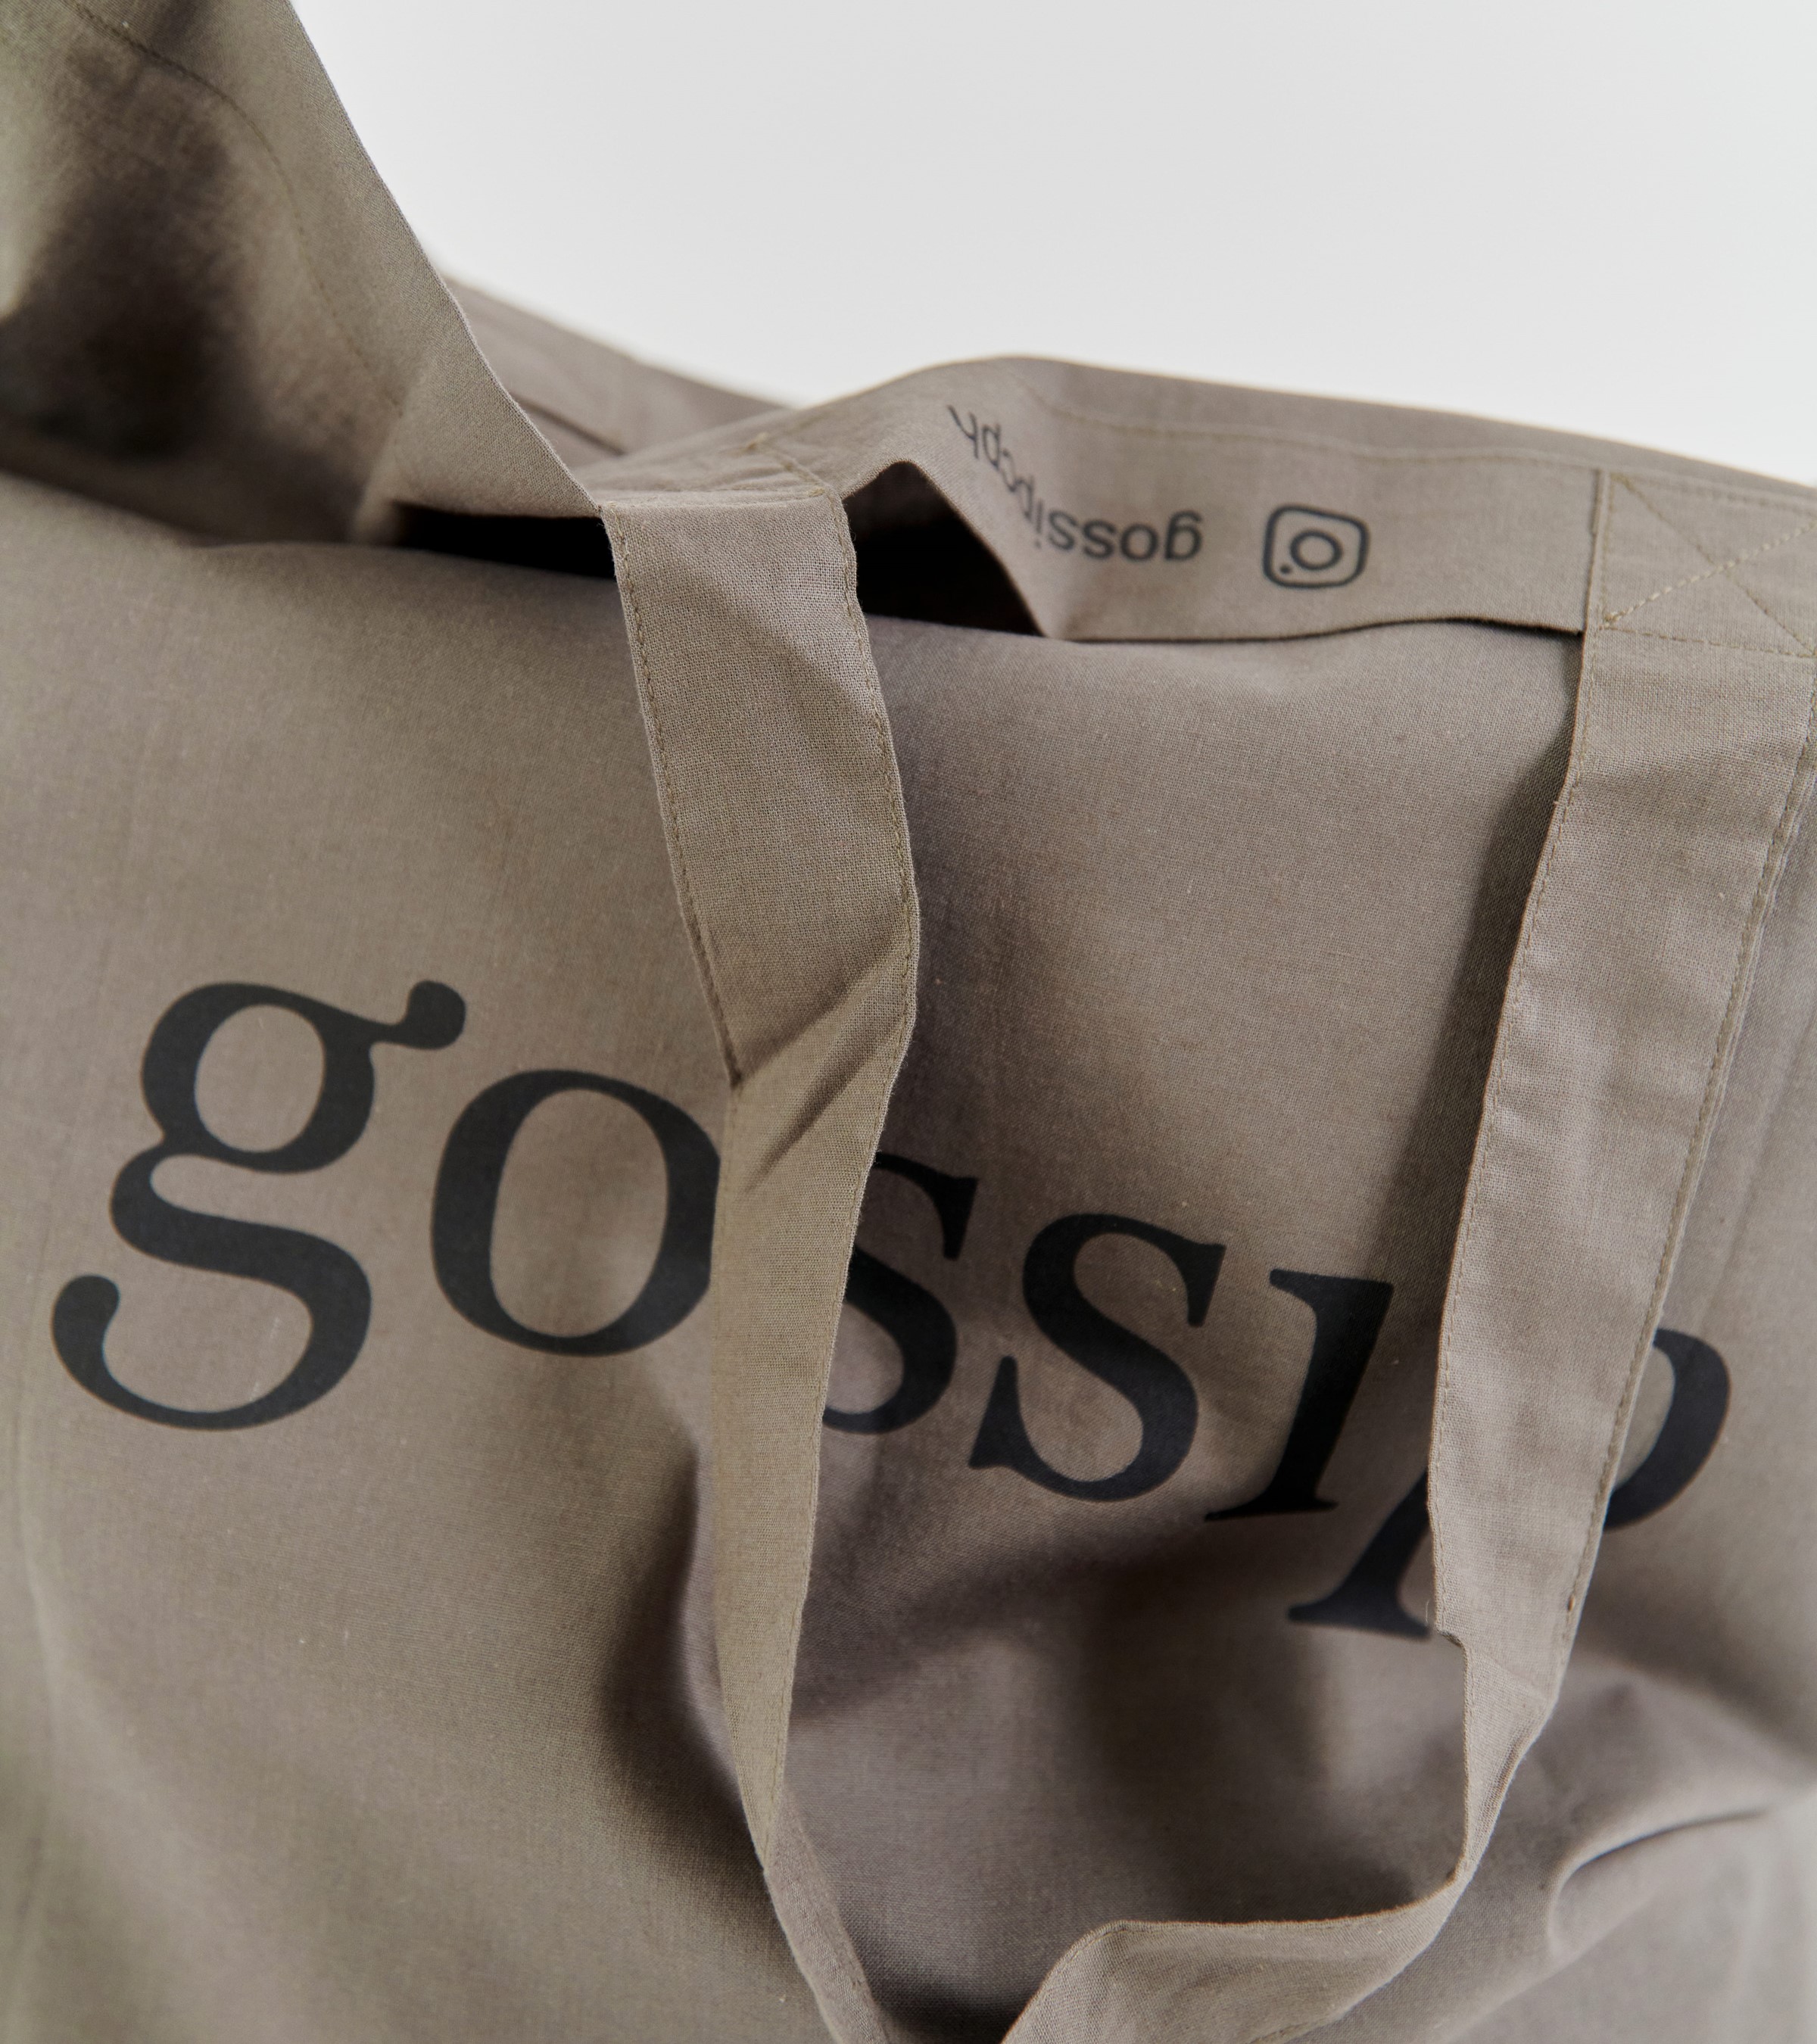 Gossip Cotton bag